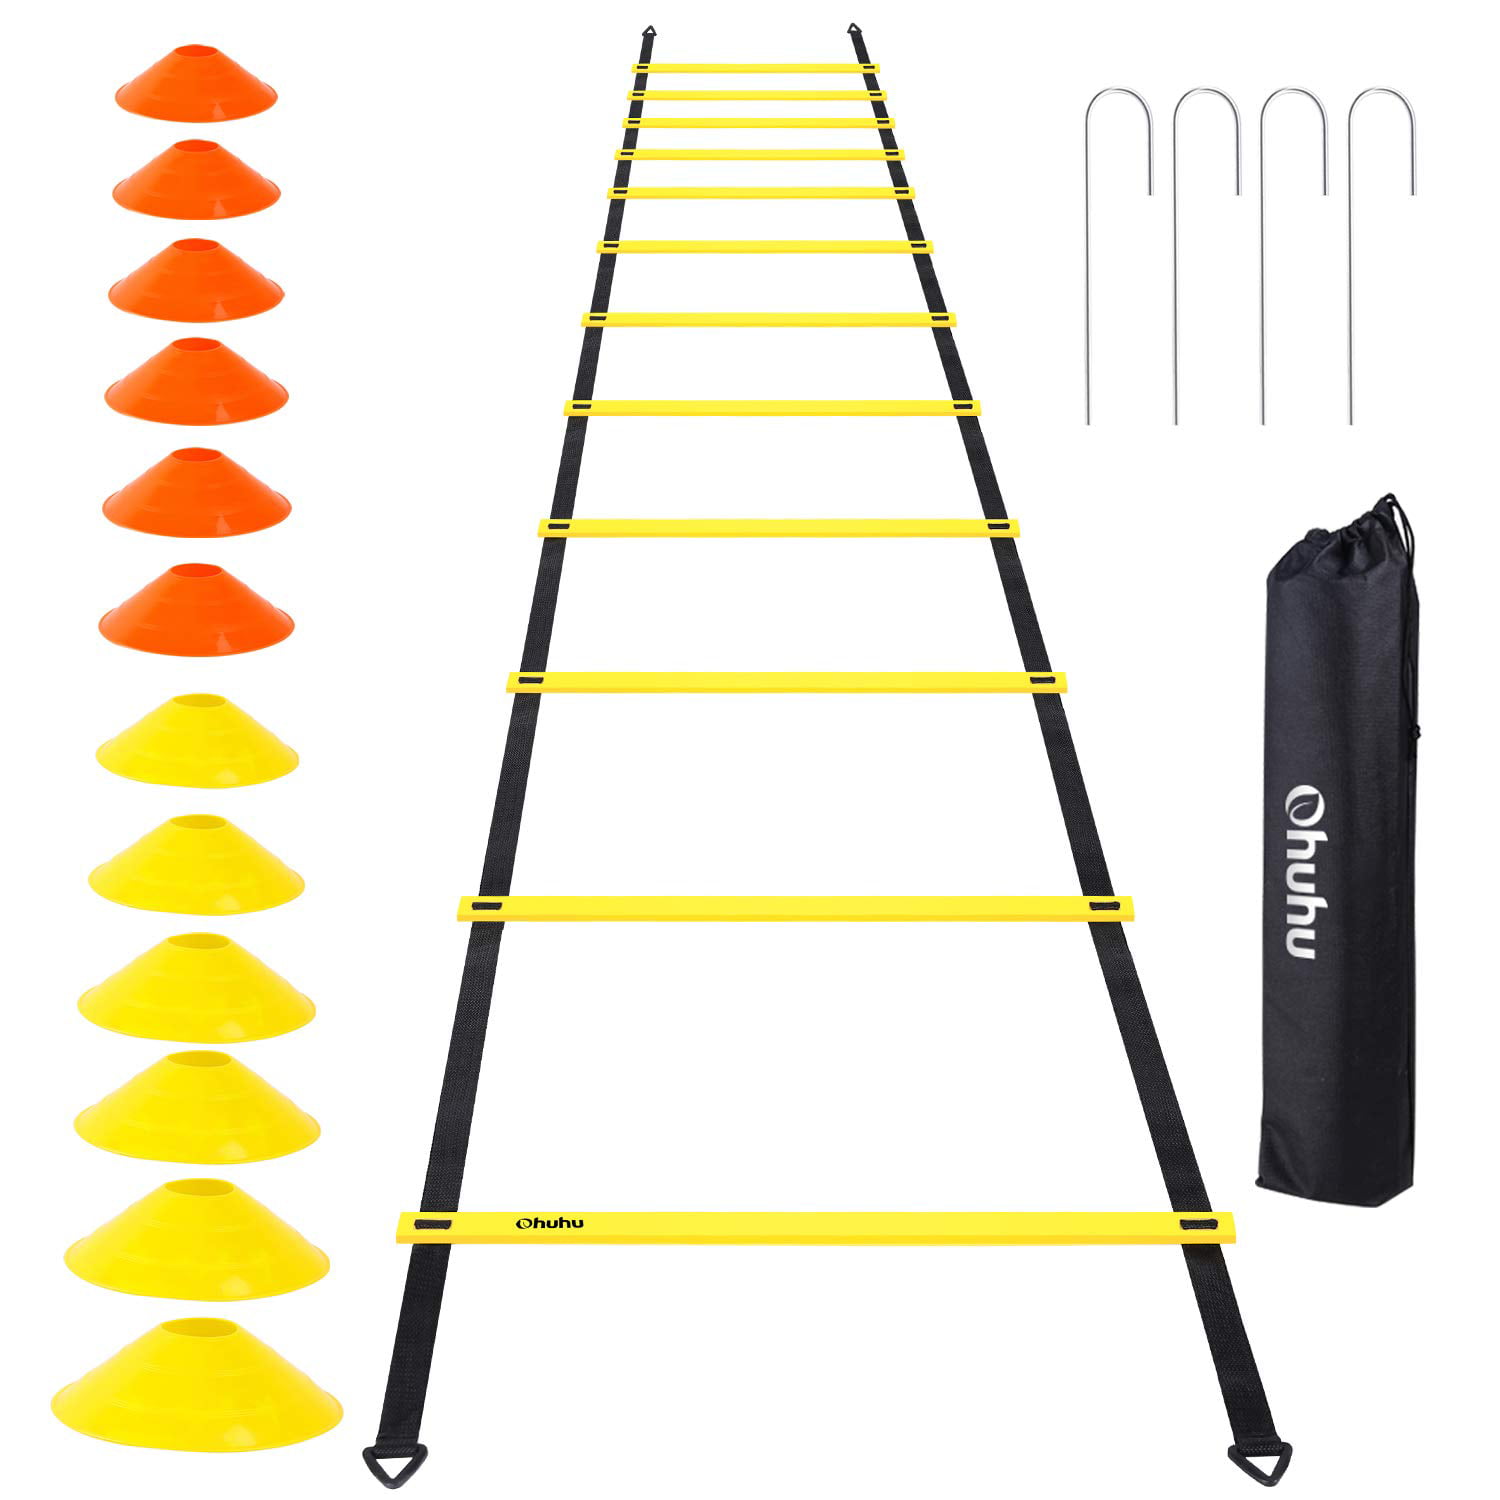 Soocer Training Pro Speed Equipment Kit/Cone/Marker/Ladder Hurdles Carry Bag Fre